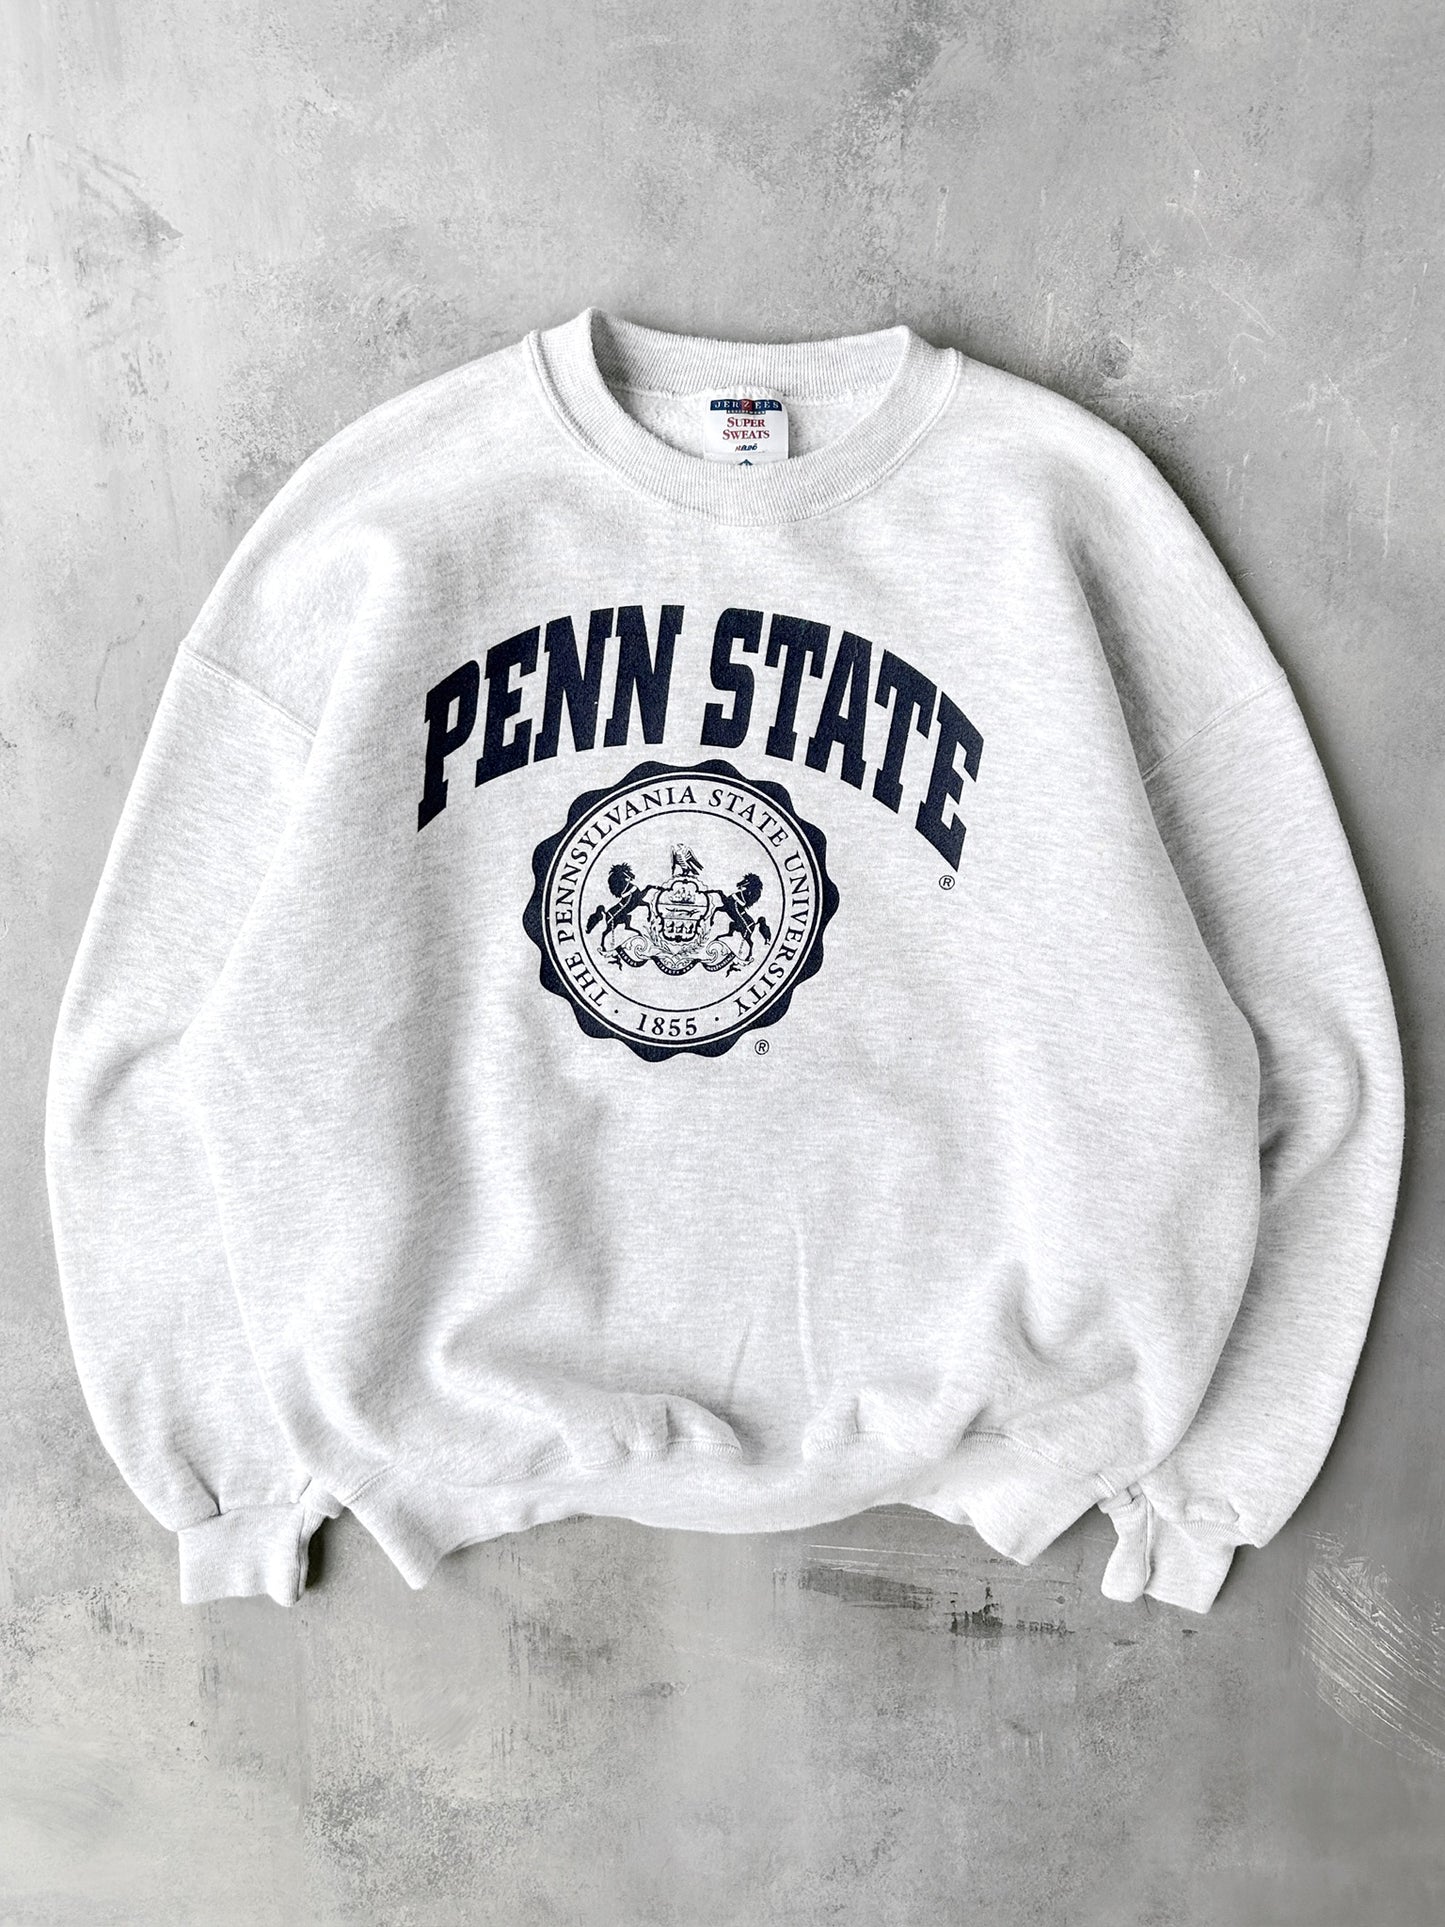 Penn State Sweatshirt 90's - XL